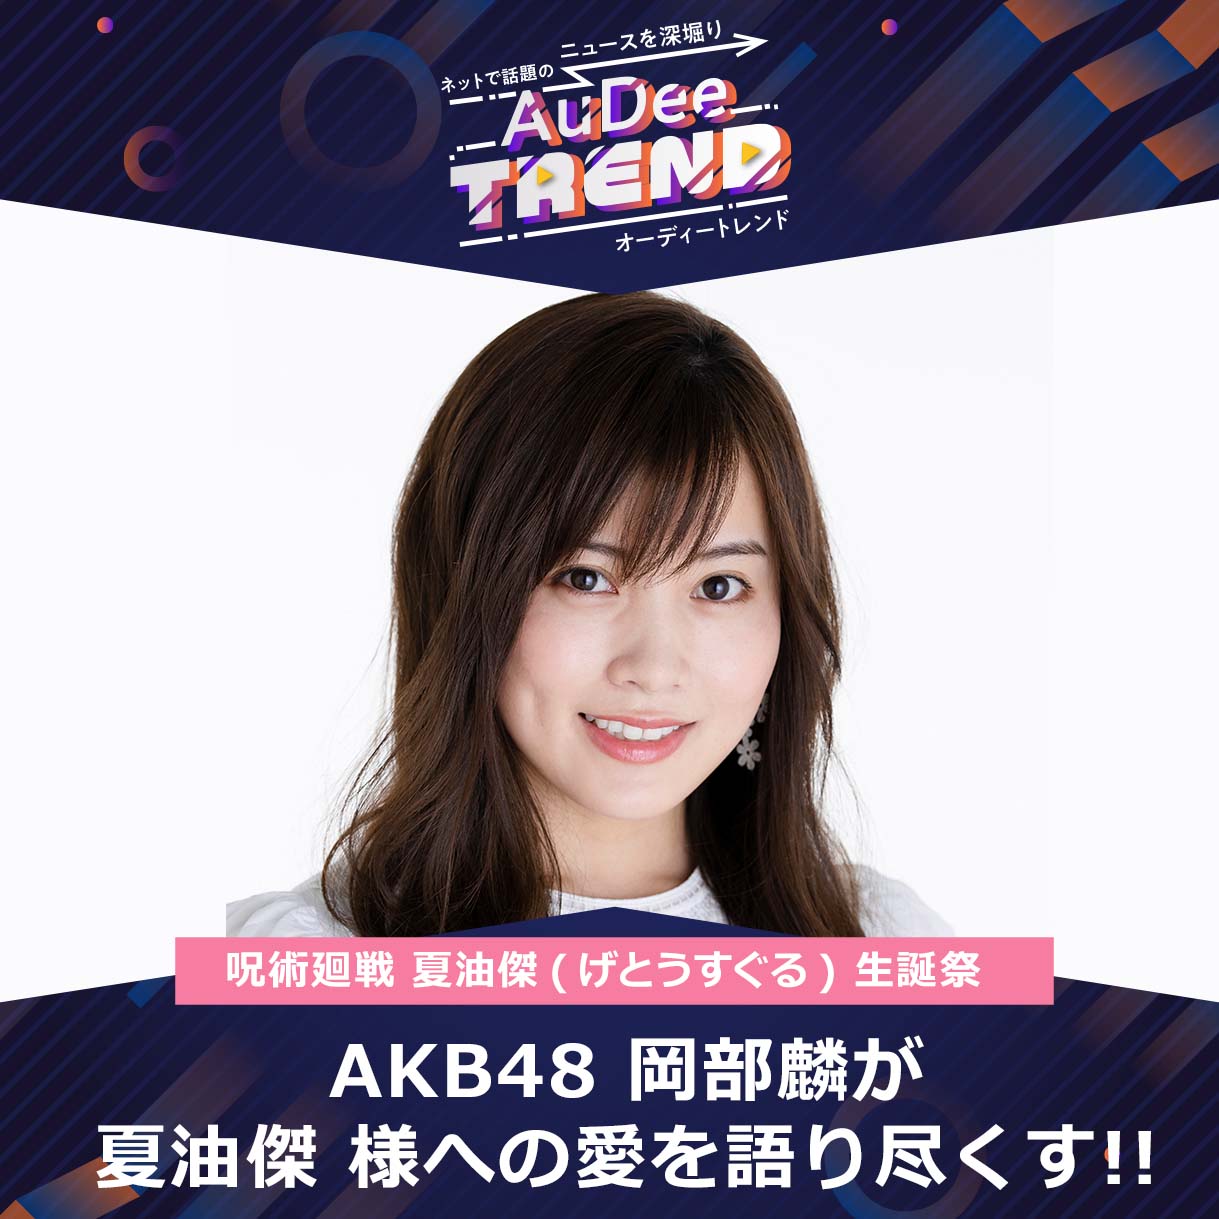 AuDee TREND|AKB48 岡部麟が語る「呪術廻戦 夏油傑様のお誕生日